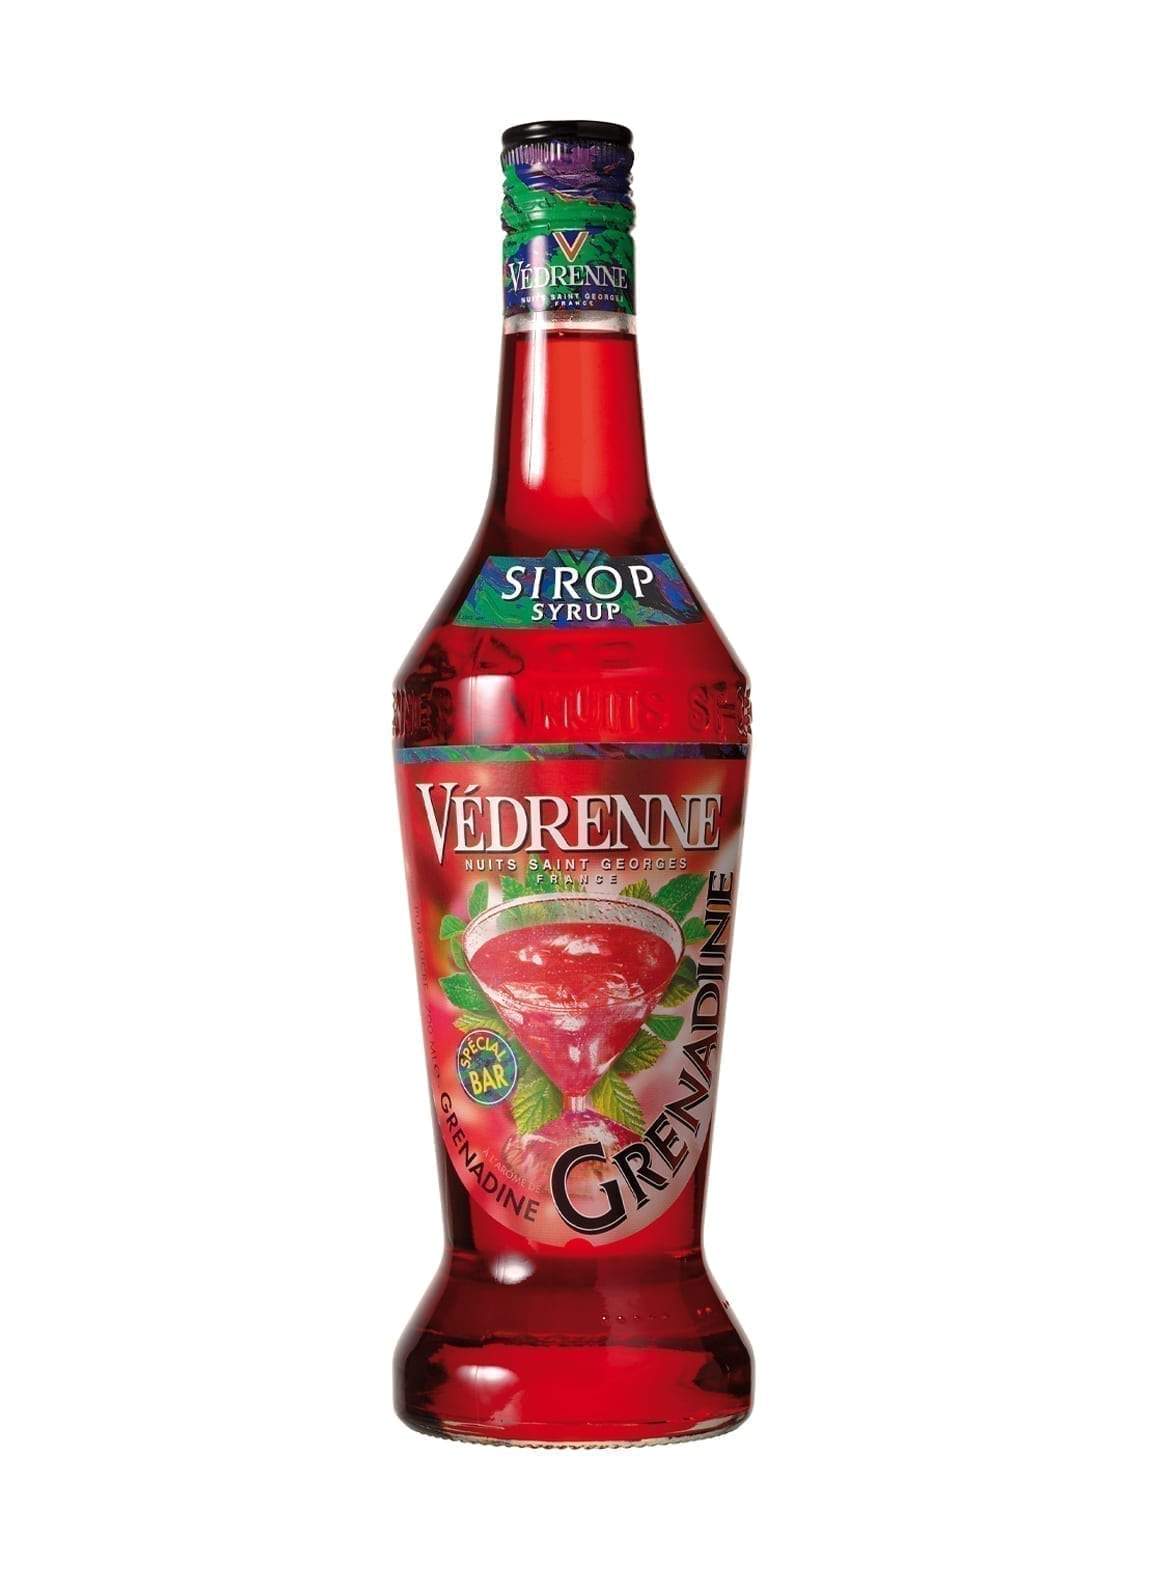 Vedrenne Sirop Grenadine (Pomegranate cordial) 700ml | Syrup | Shop online at Spirits of France